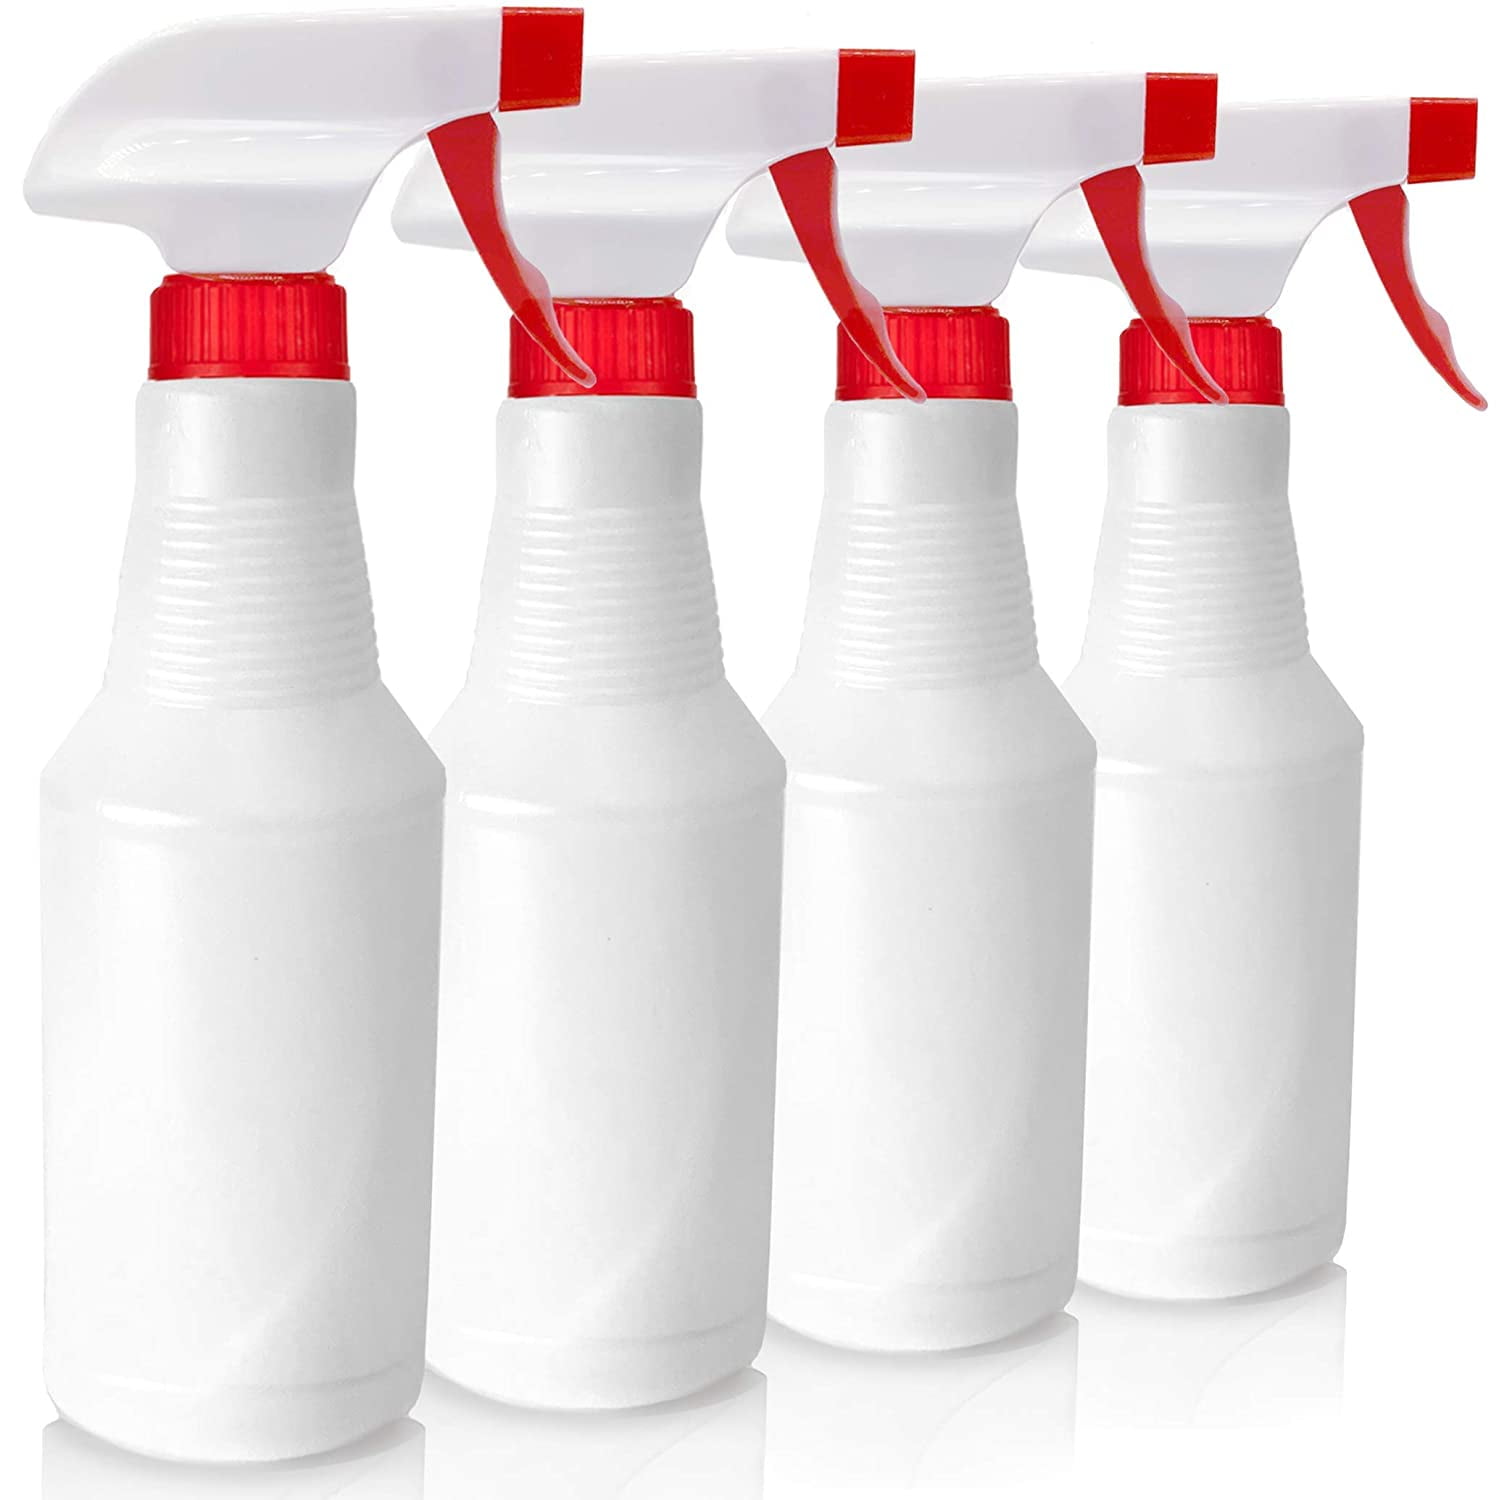 48 oz. Industrial Pro Spray Bottle